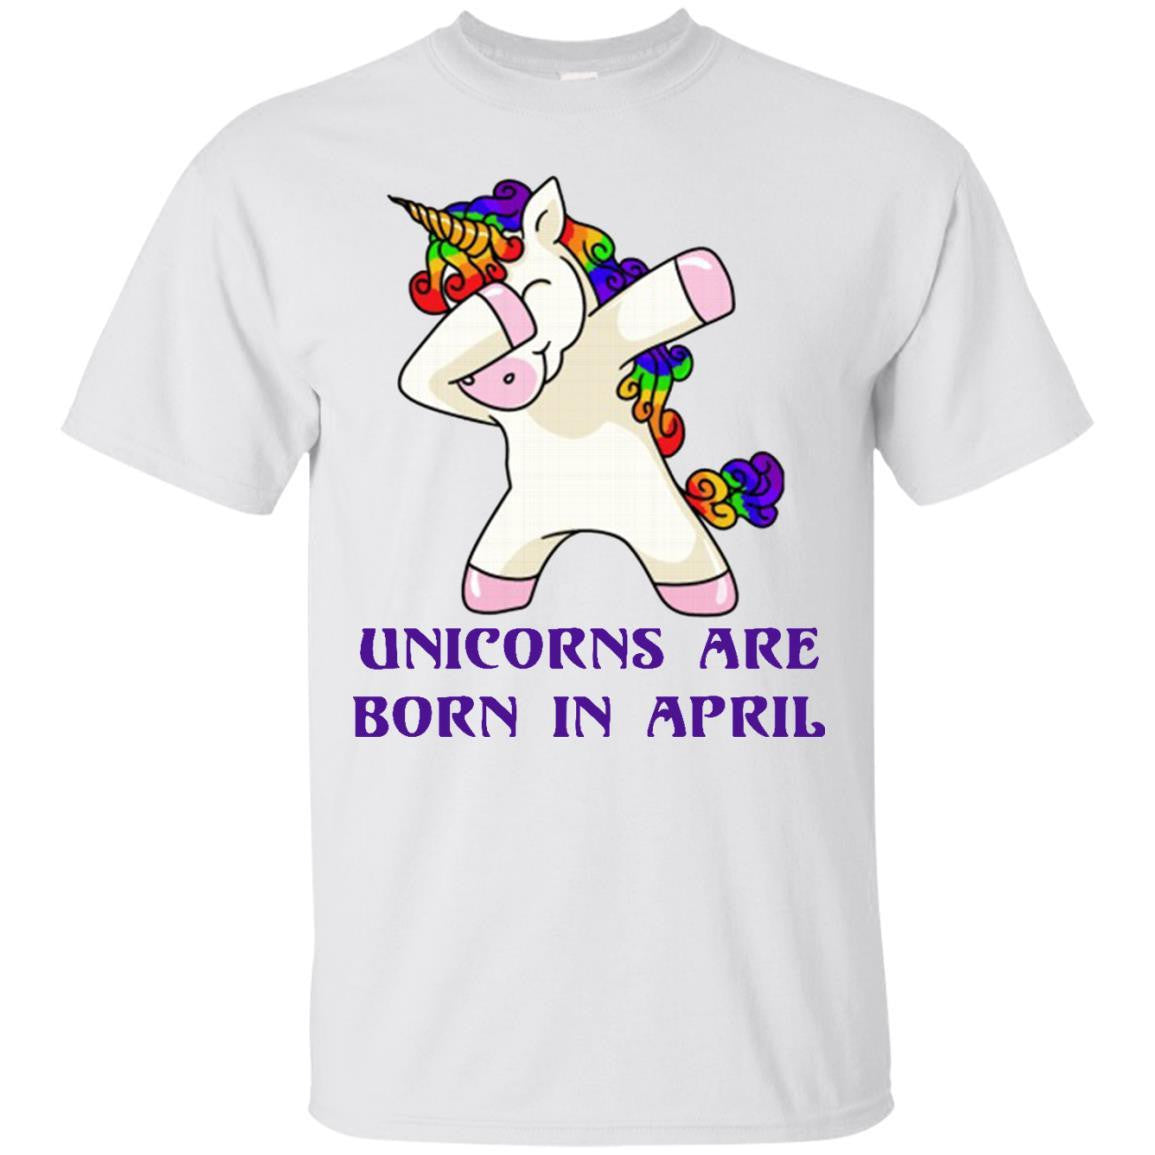 Dabbing Unicorns are Born in April shirt, tank top, racerback